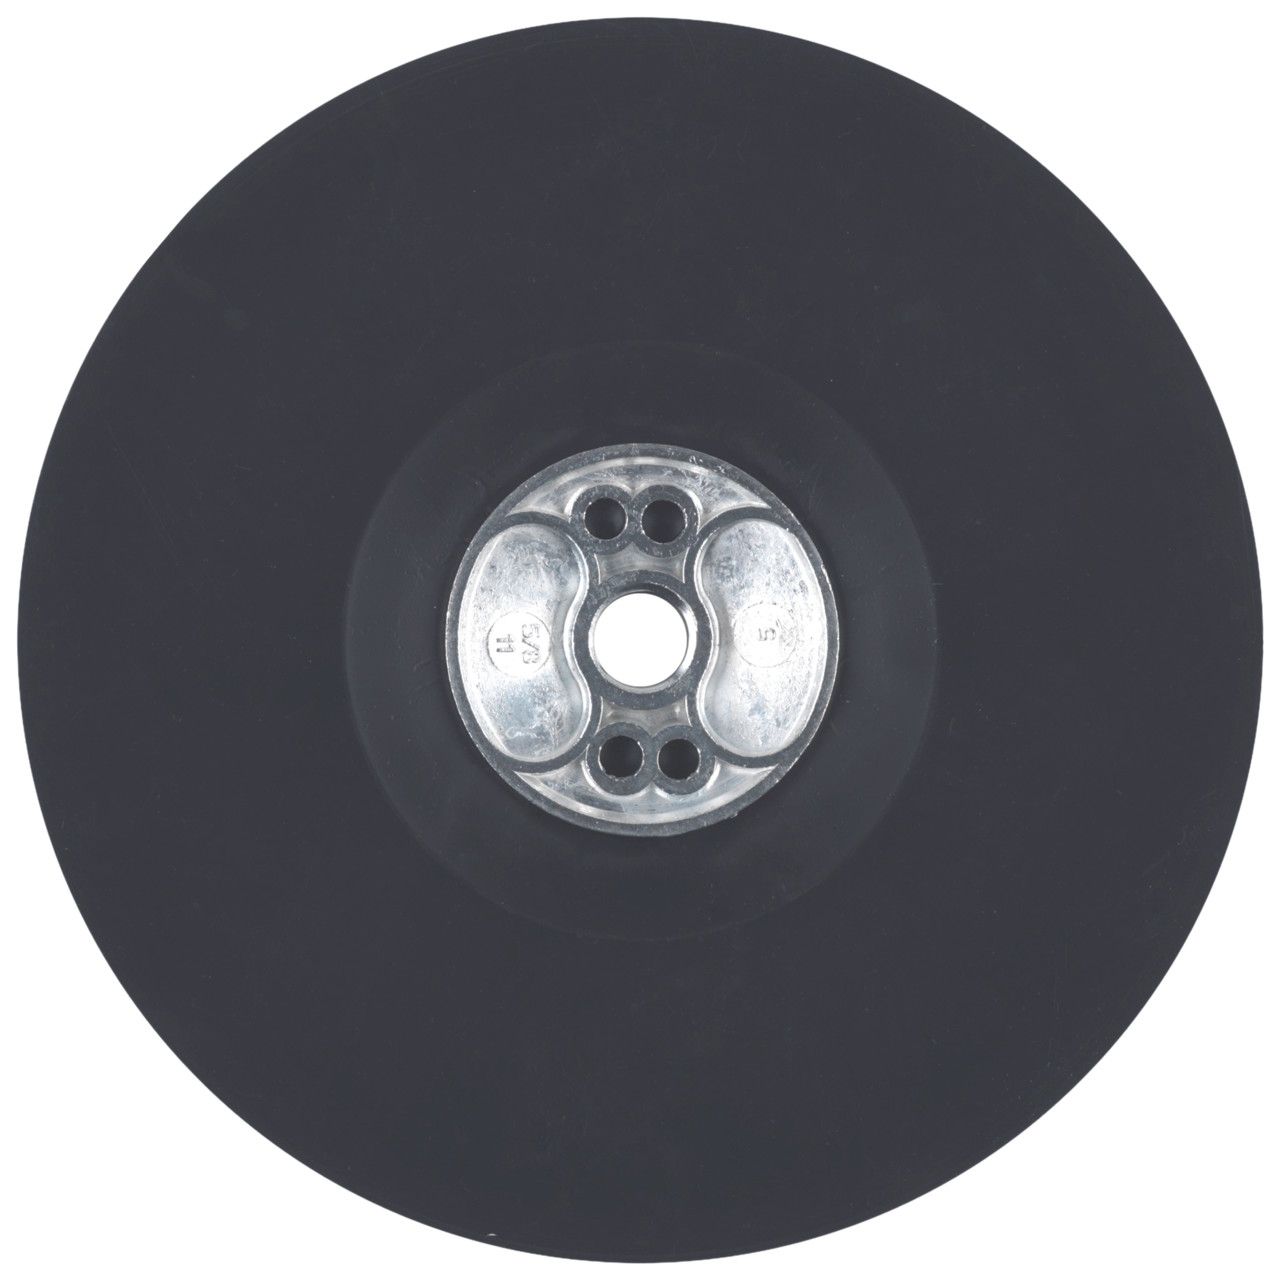 Tyrolit Accesorios para discos de fibra 115 x 22 #PAD FIBER 115x22 M14 B HARD